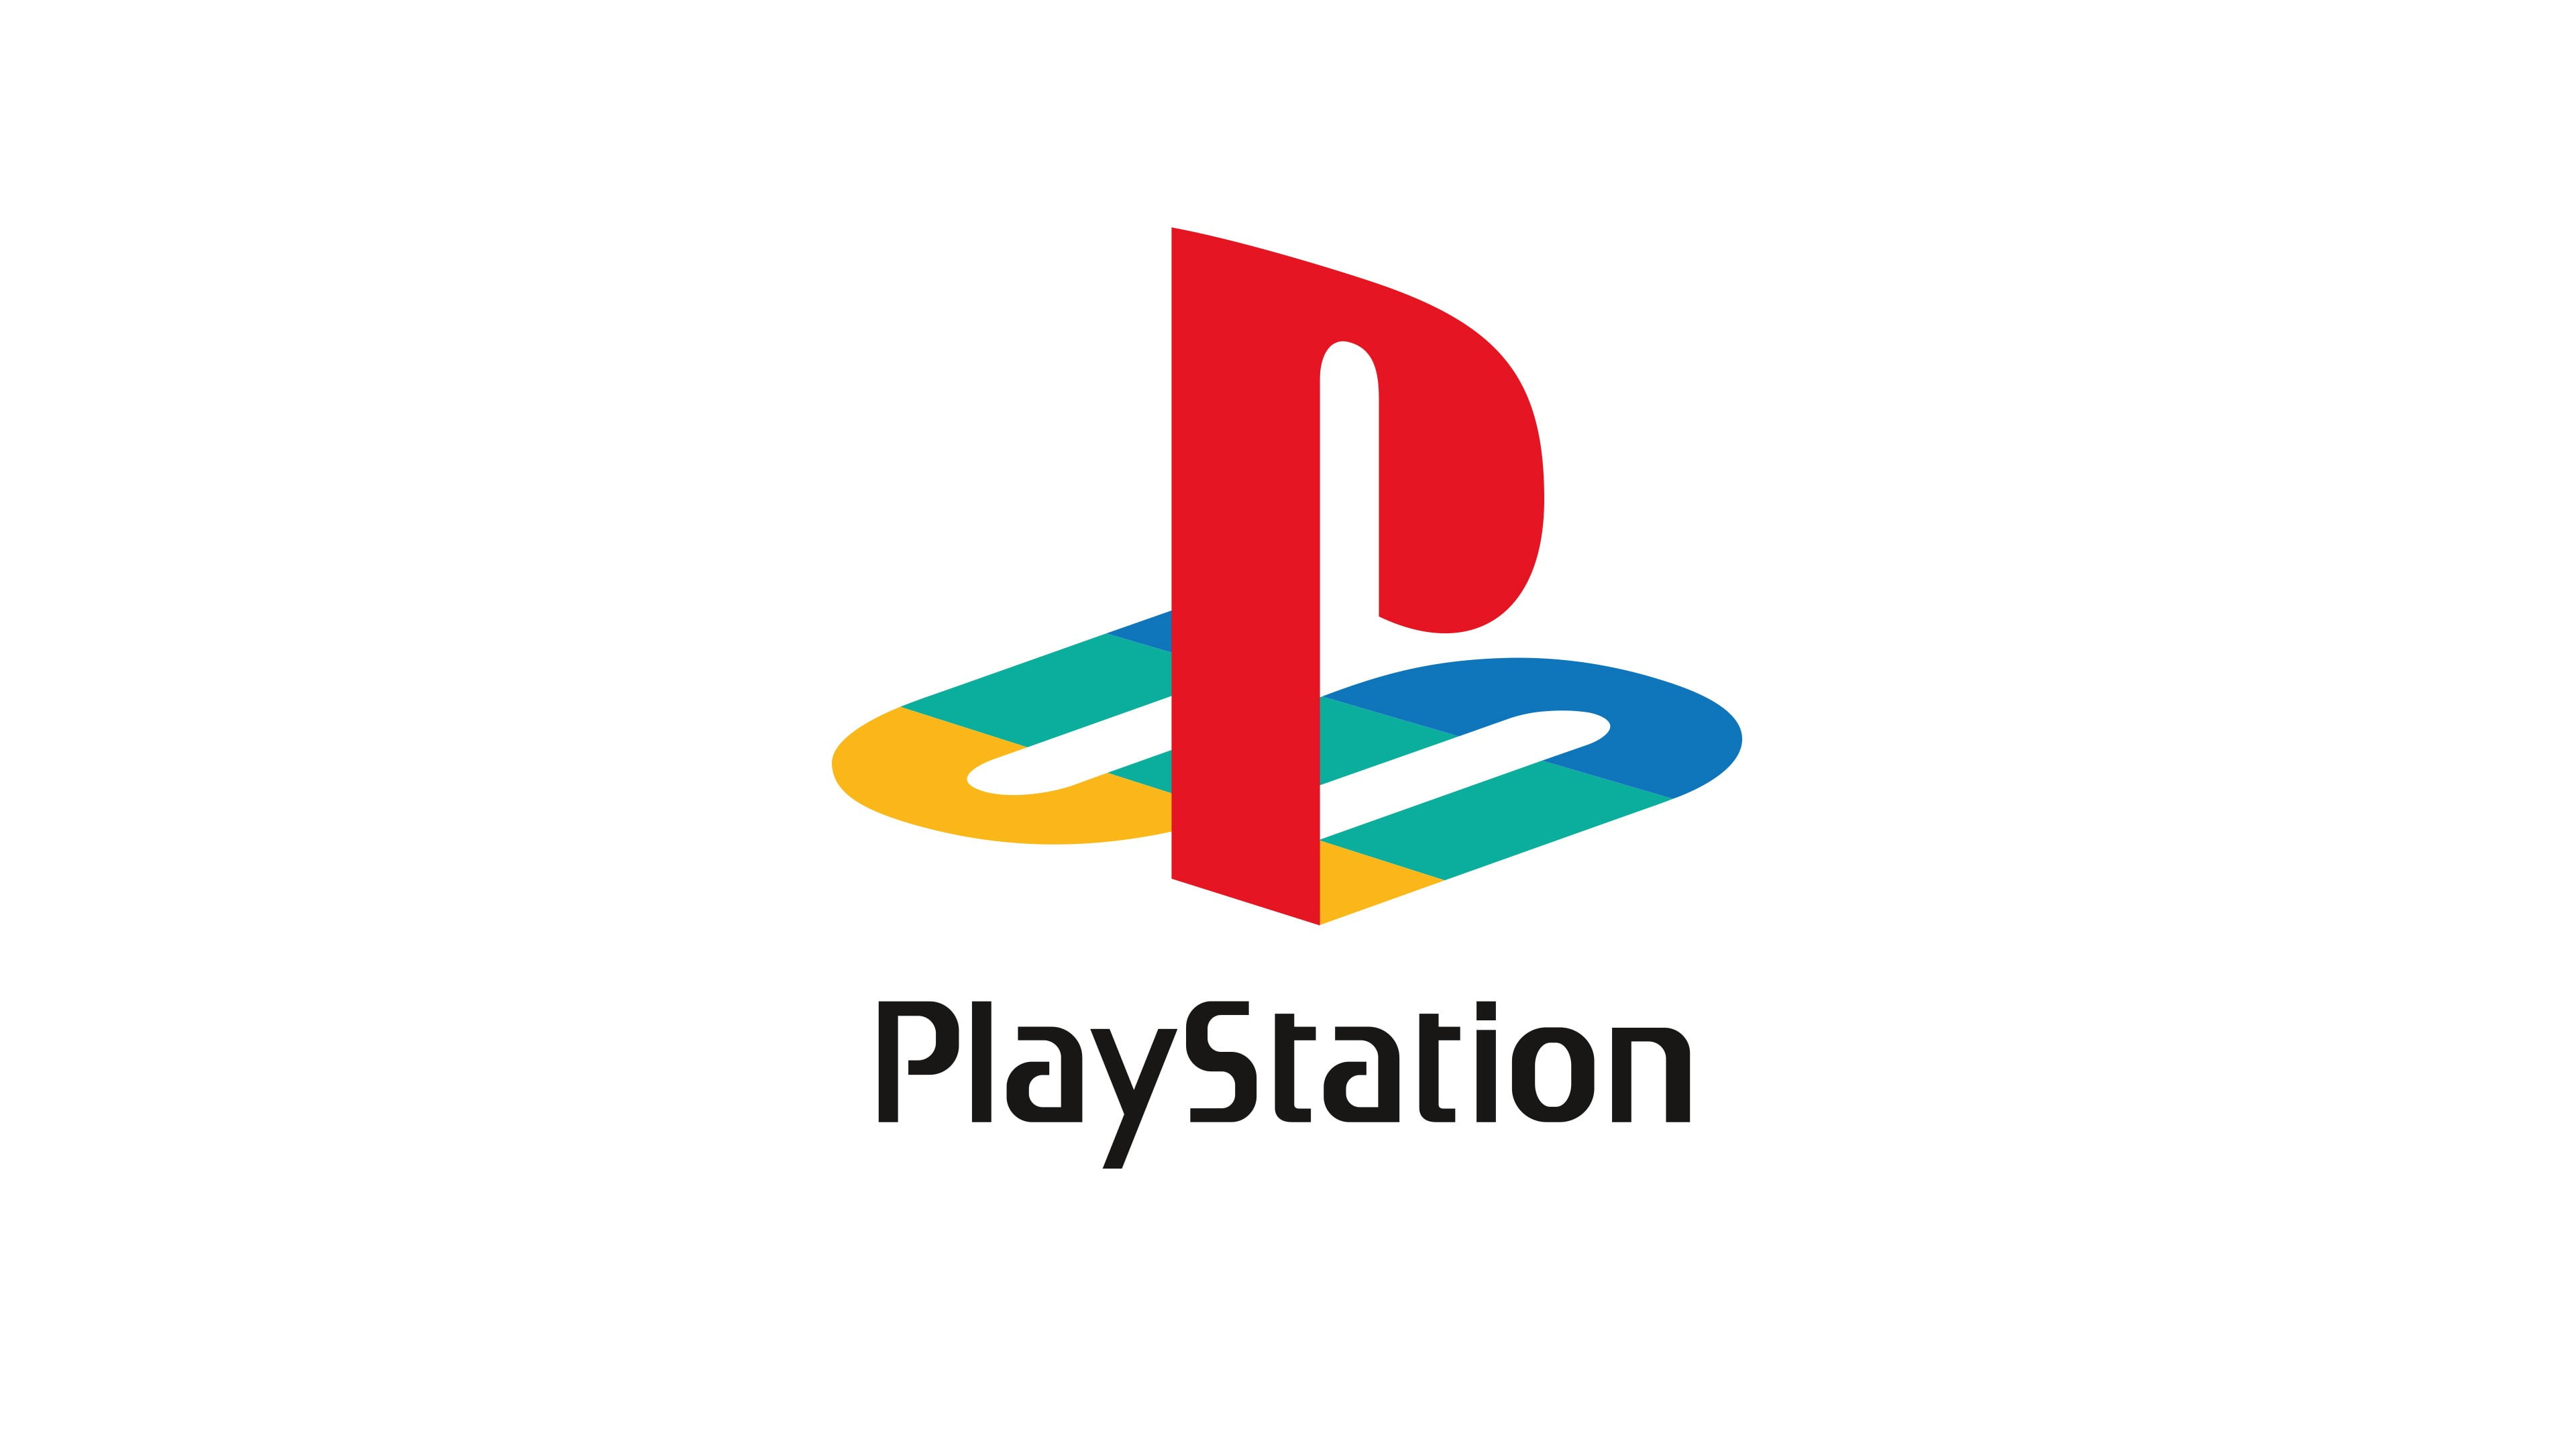 Sony Playstation logo, logo, PlayStation, video games ...